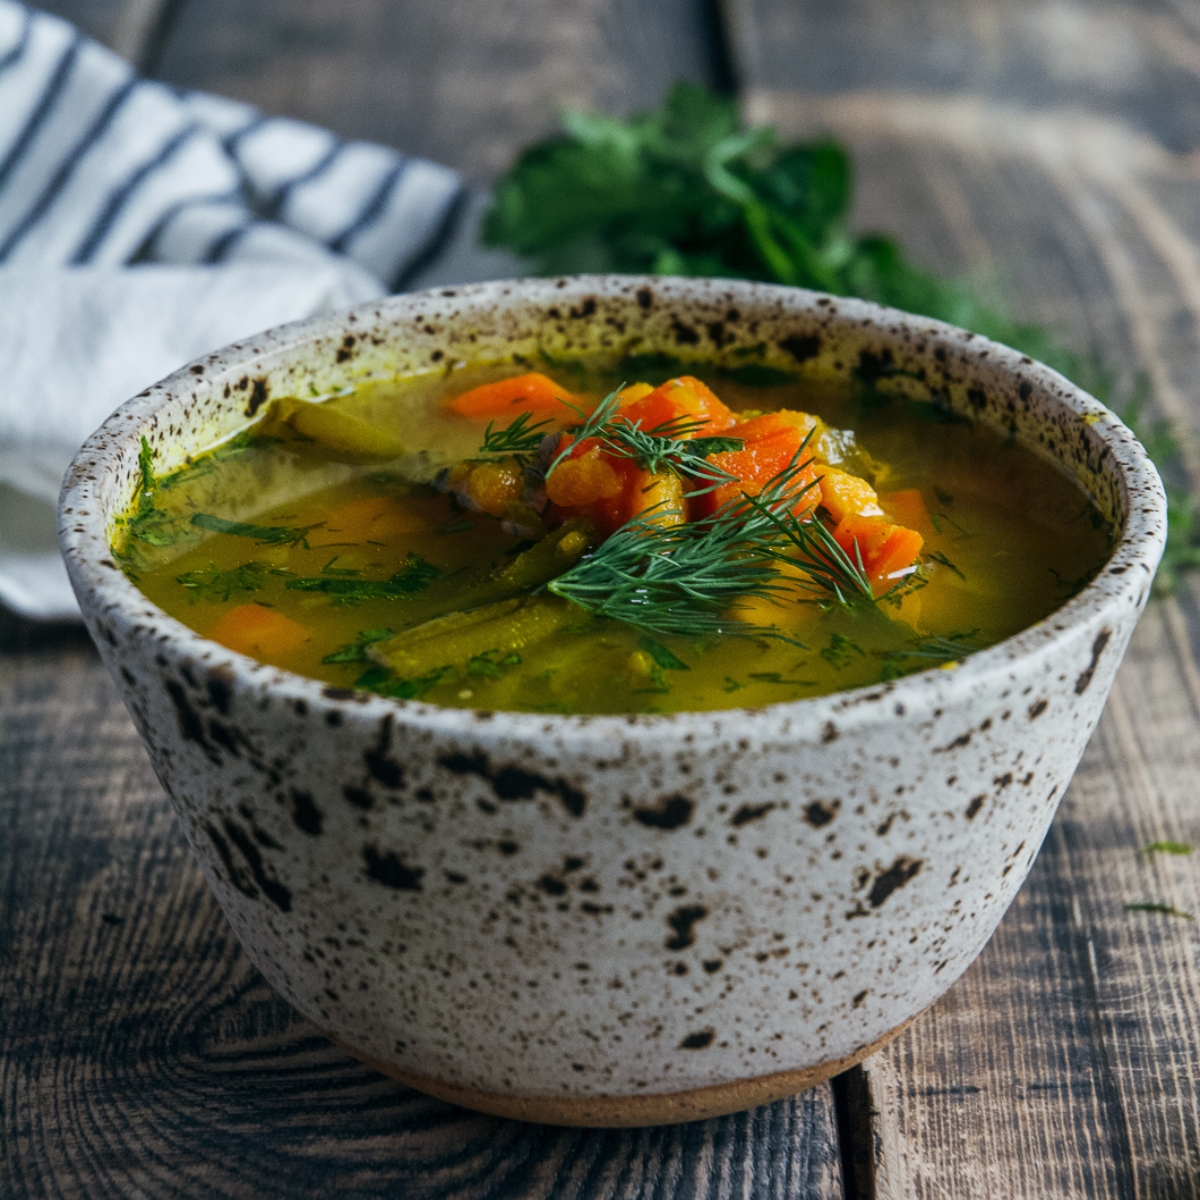 https://calmeats.com/wp-content/uploads/2017/07/bone-broth-vegetable-soup-featured-image.png